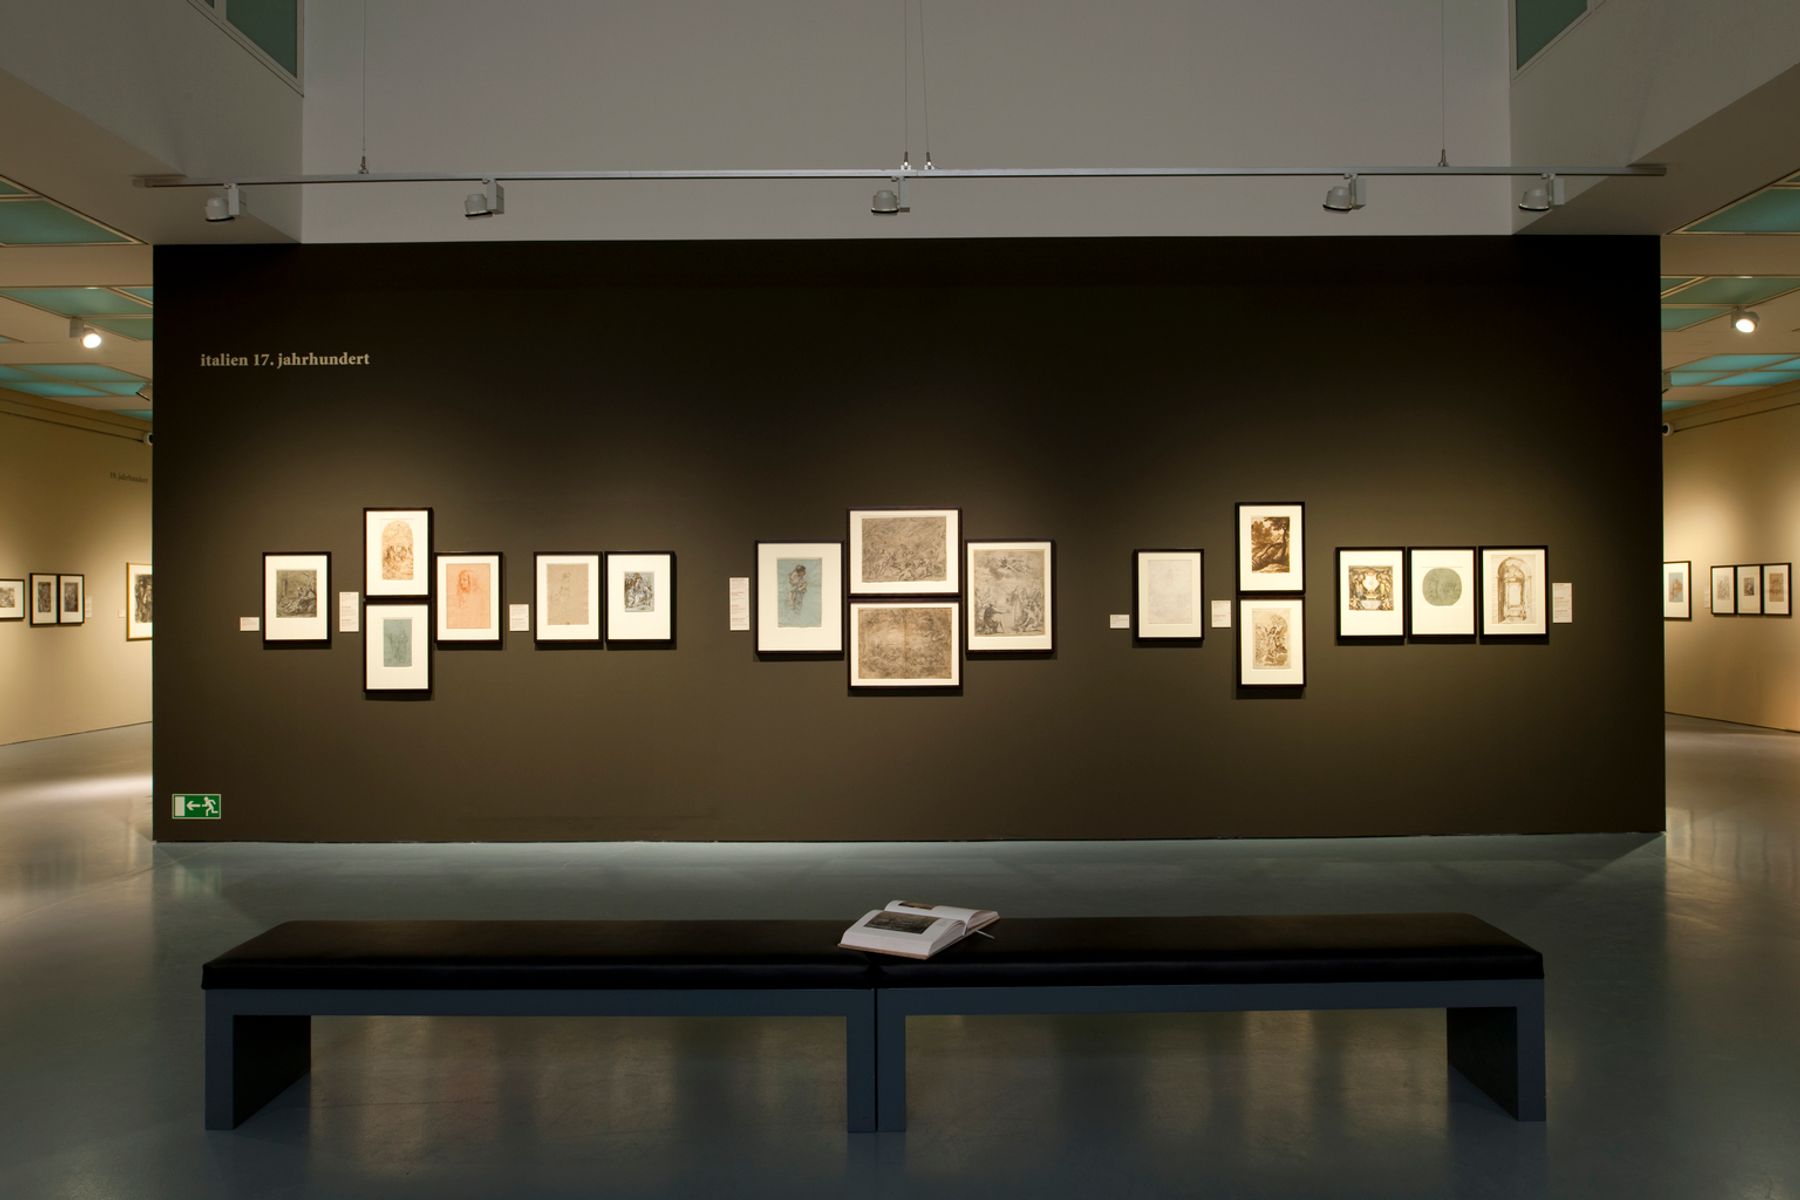 Museum Kunst Palast, "On Paper" exhibition, Düsseldorf. Photography: Thomas Mayer, Neuss.